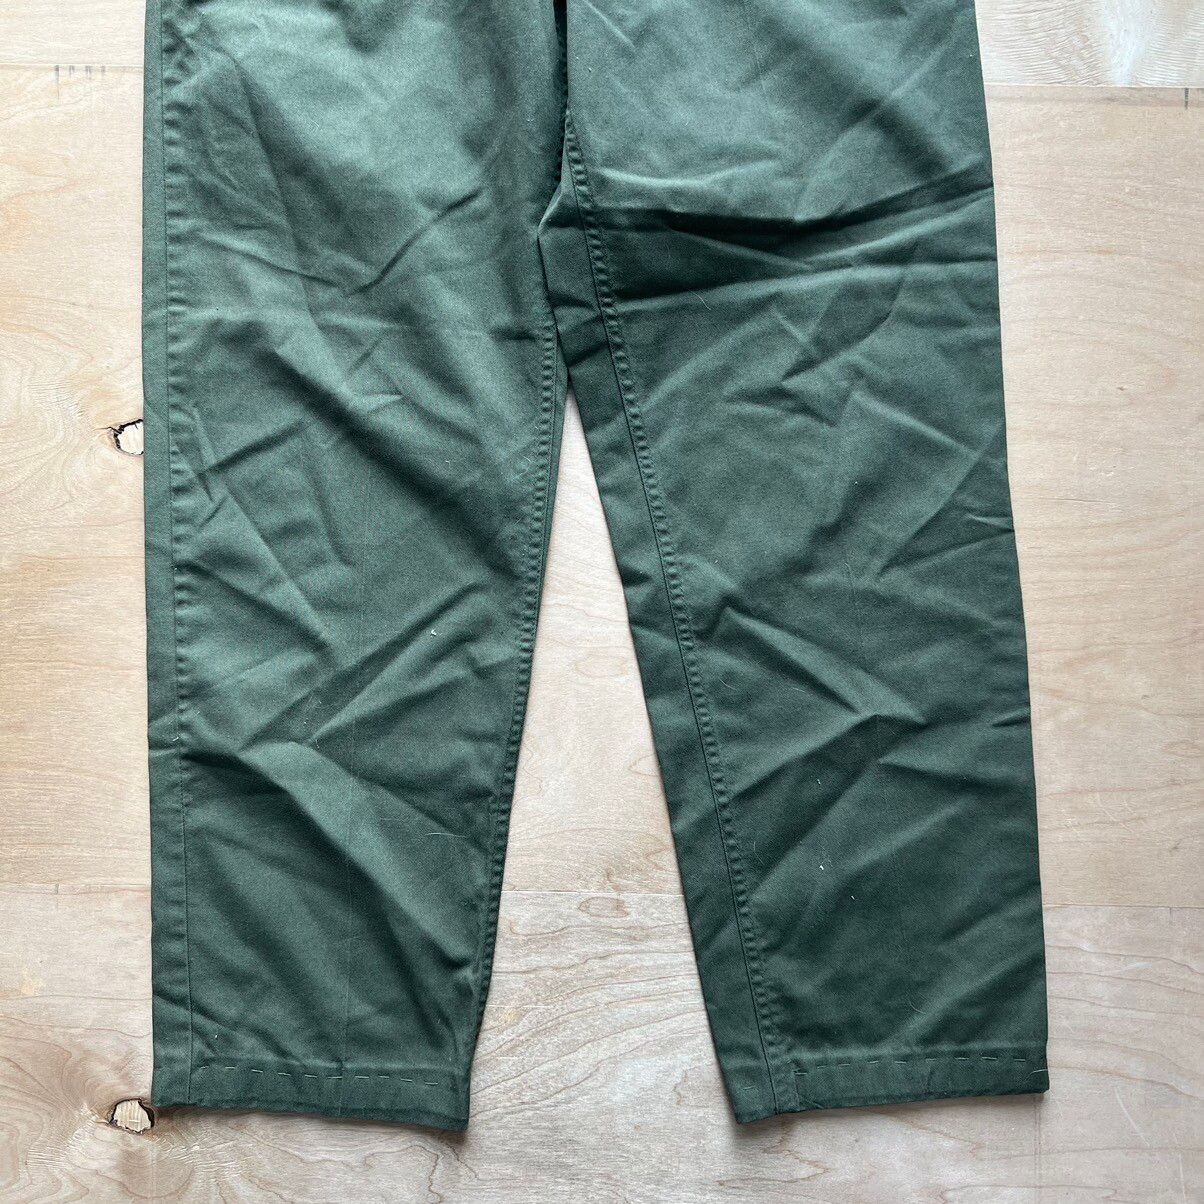 Vintage Vintage Military OG 507 Pants 26x28.5 Green Army Workwear Size US 26 / EU 42 - 3 Thumbnail